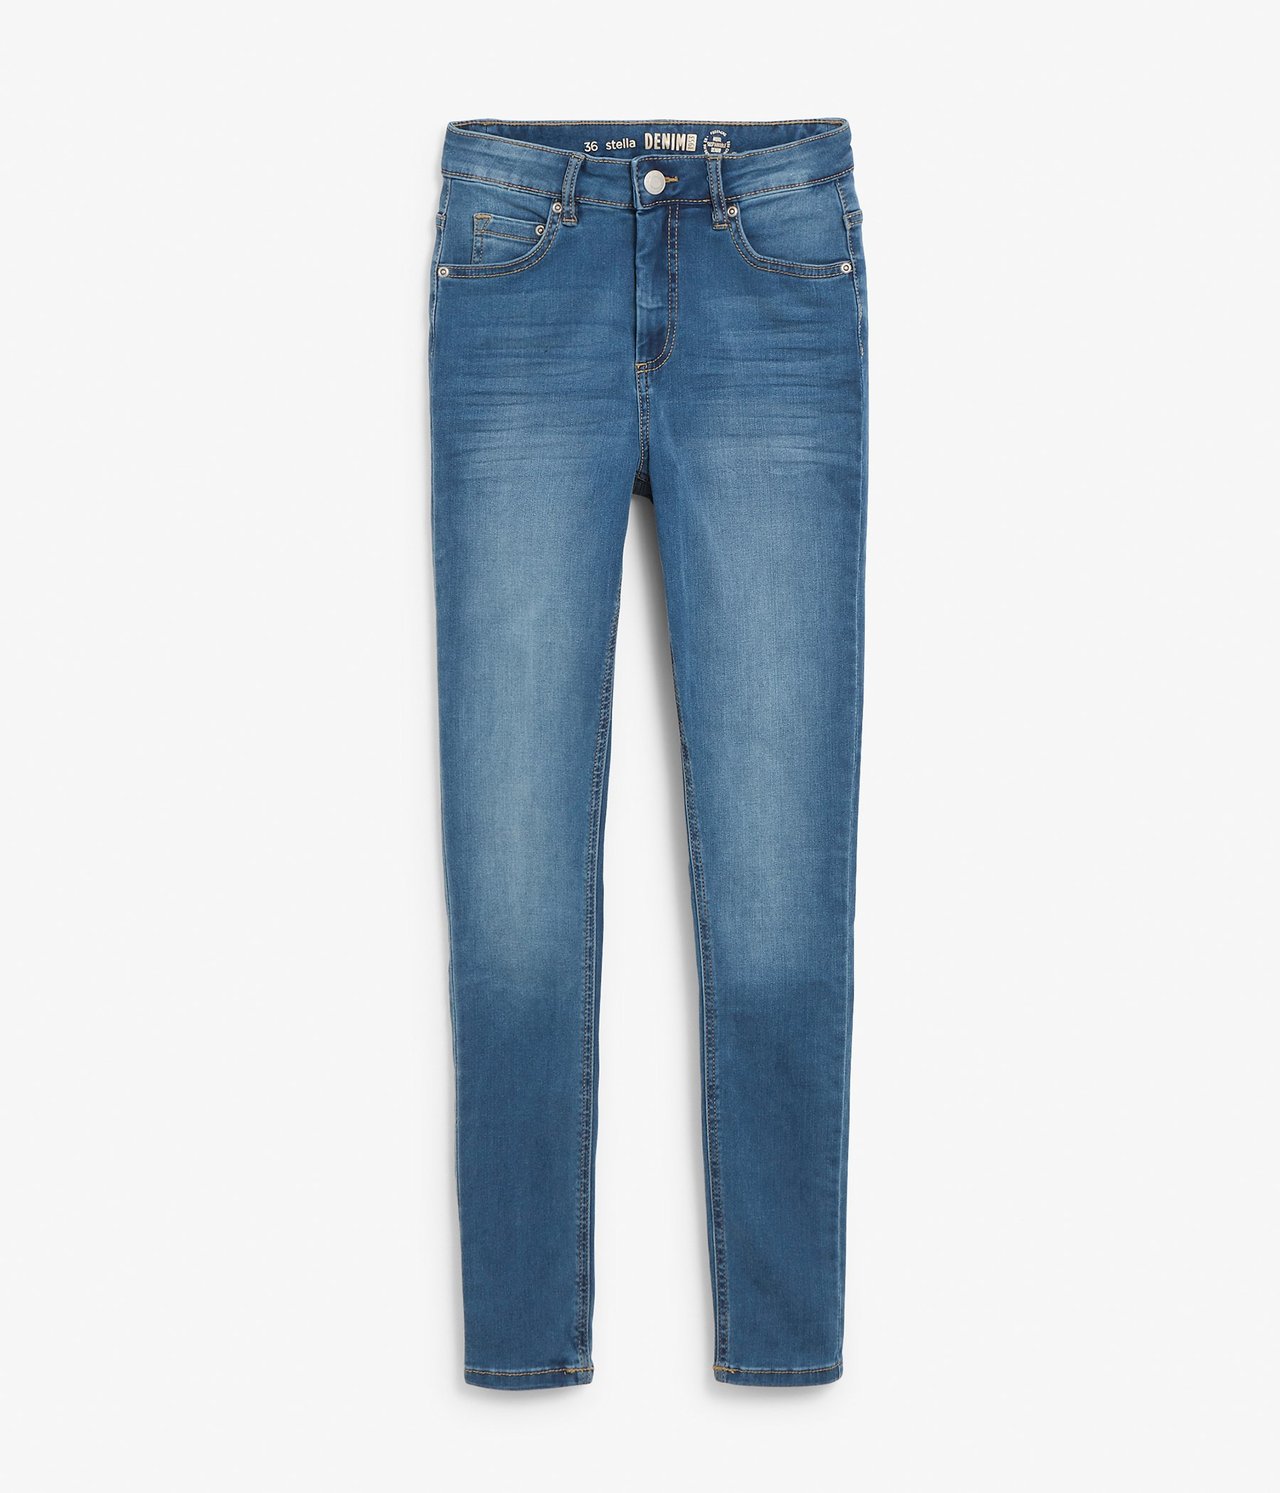 Super slim jeans extra long leg - Denimi - 5